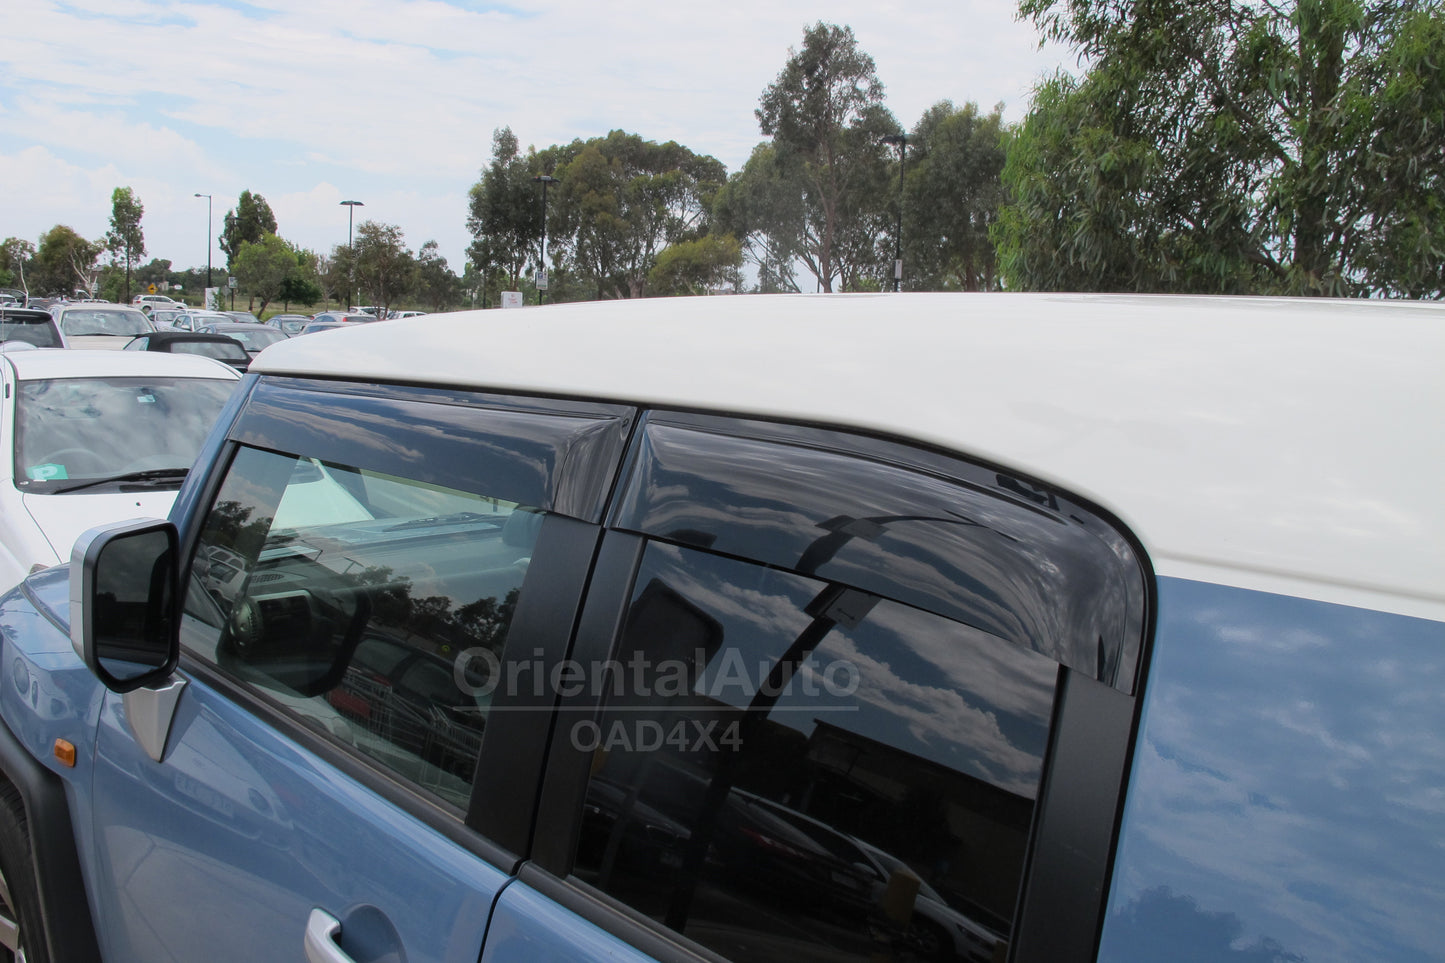 Premium Weathershields Weather Shields Window Visor For Toyota FJ Cruiser 2011-2019 4pcs